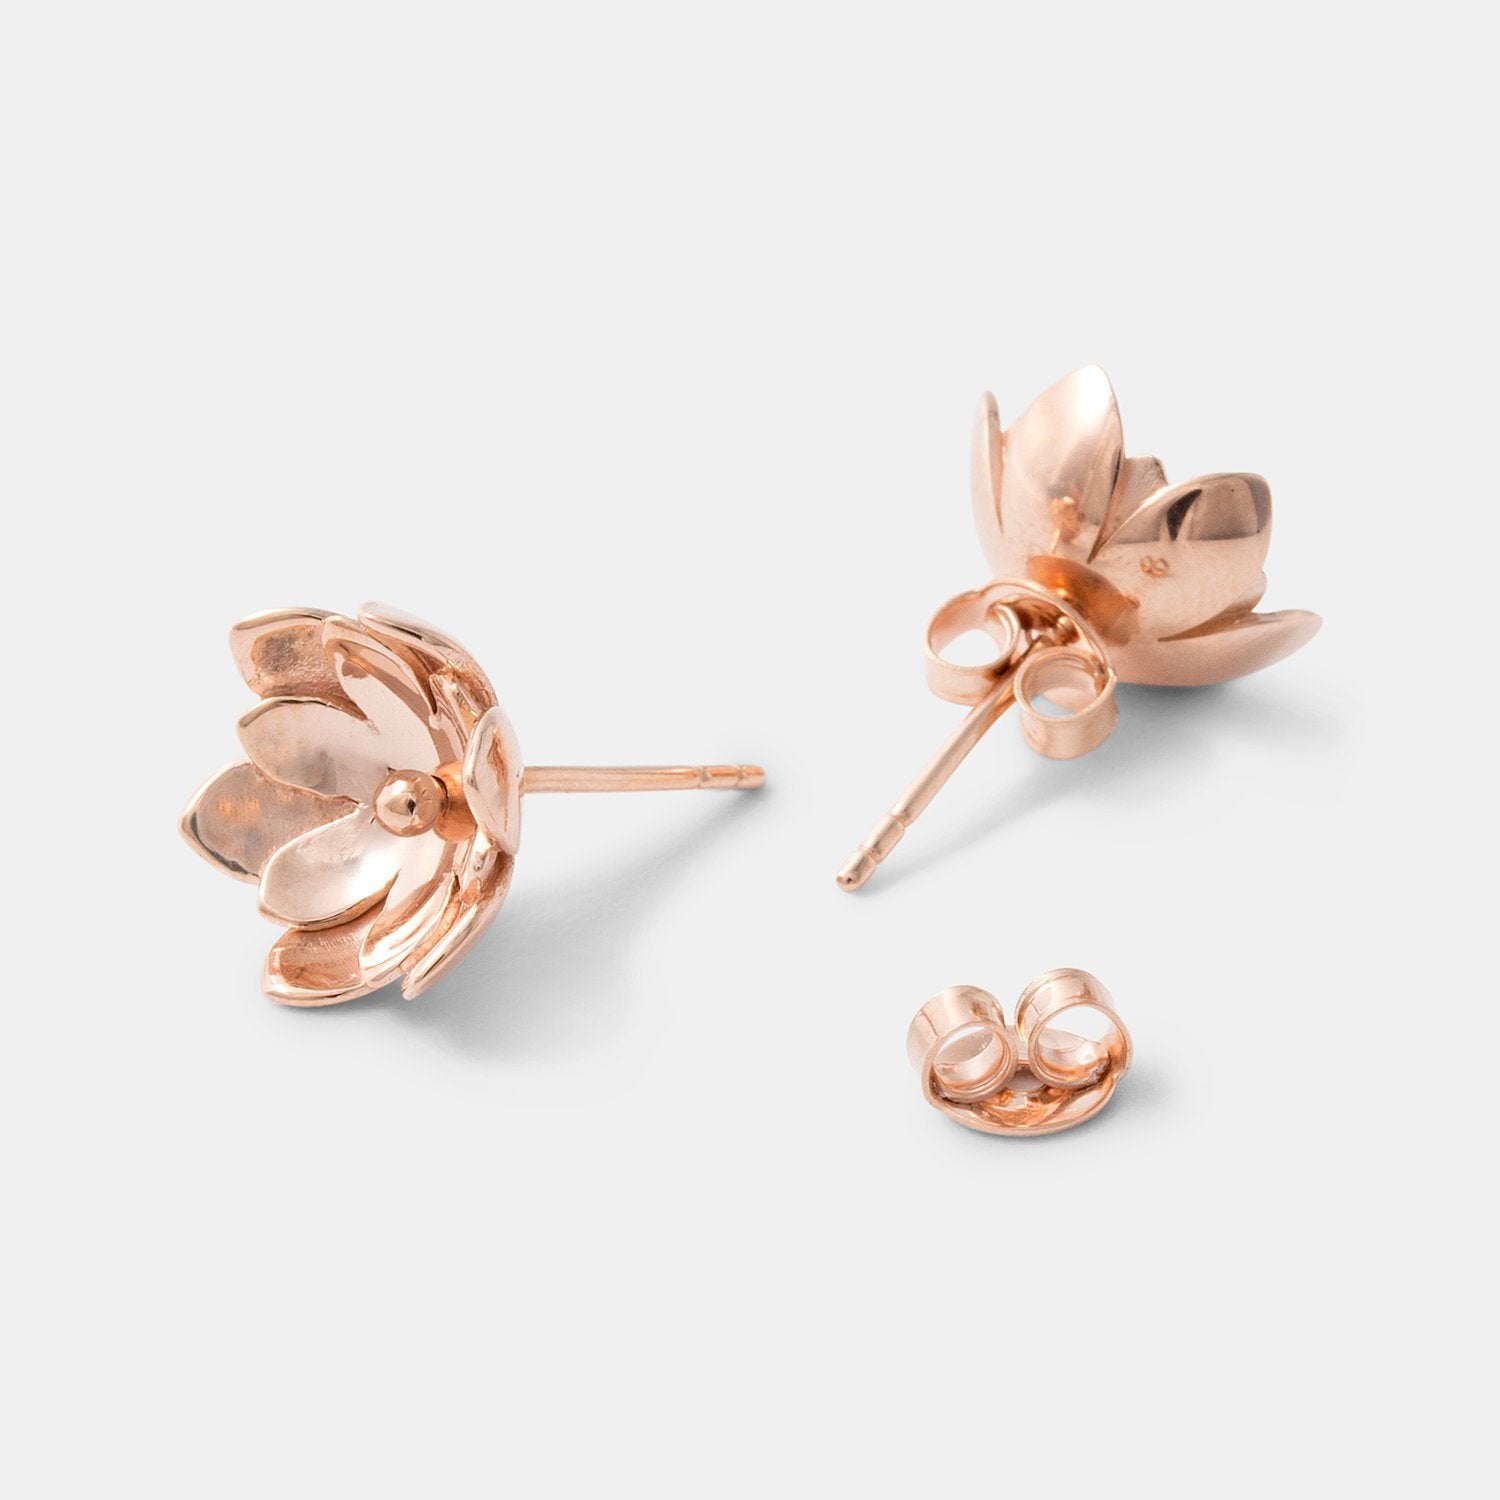 Double tulip stud earrings - Simone Walsh Jewellery Australia